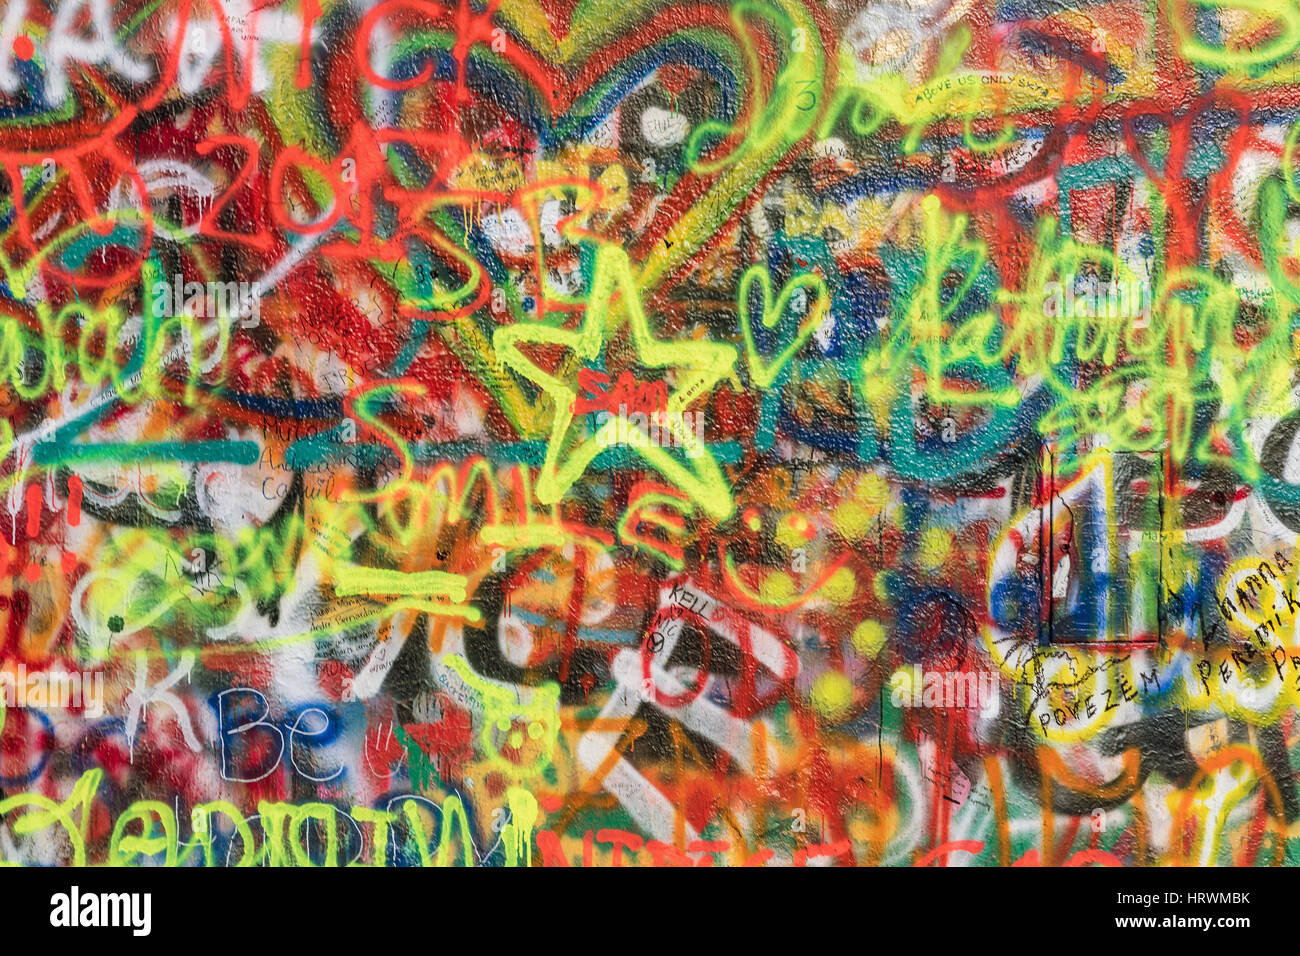 Praga, República Checa - Marzo 02, 2017: el muro lennon. John Lennon un graffiti inspirované kousky textu z písní beatles en la ciudad antigua de Praga. Foto de stock